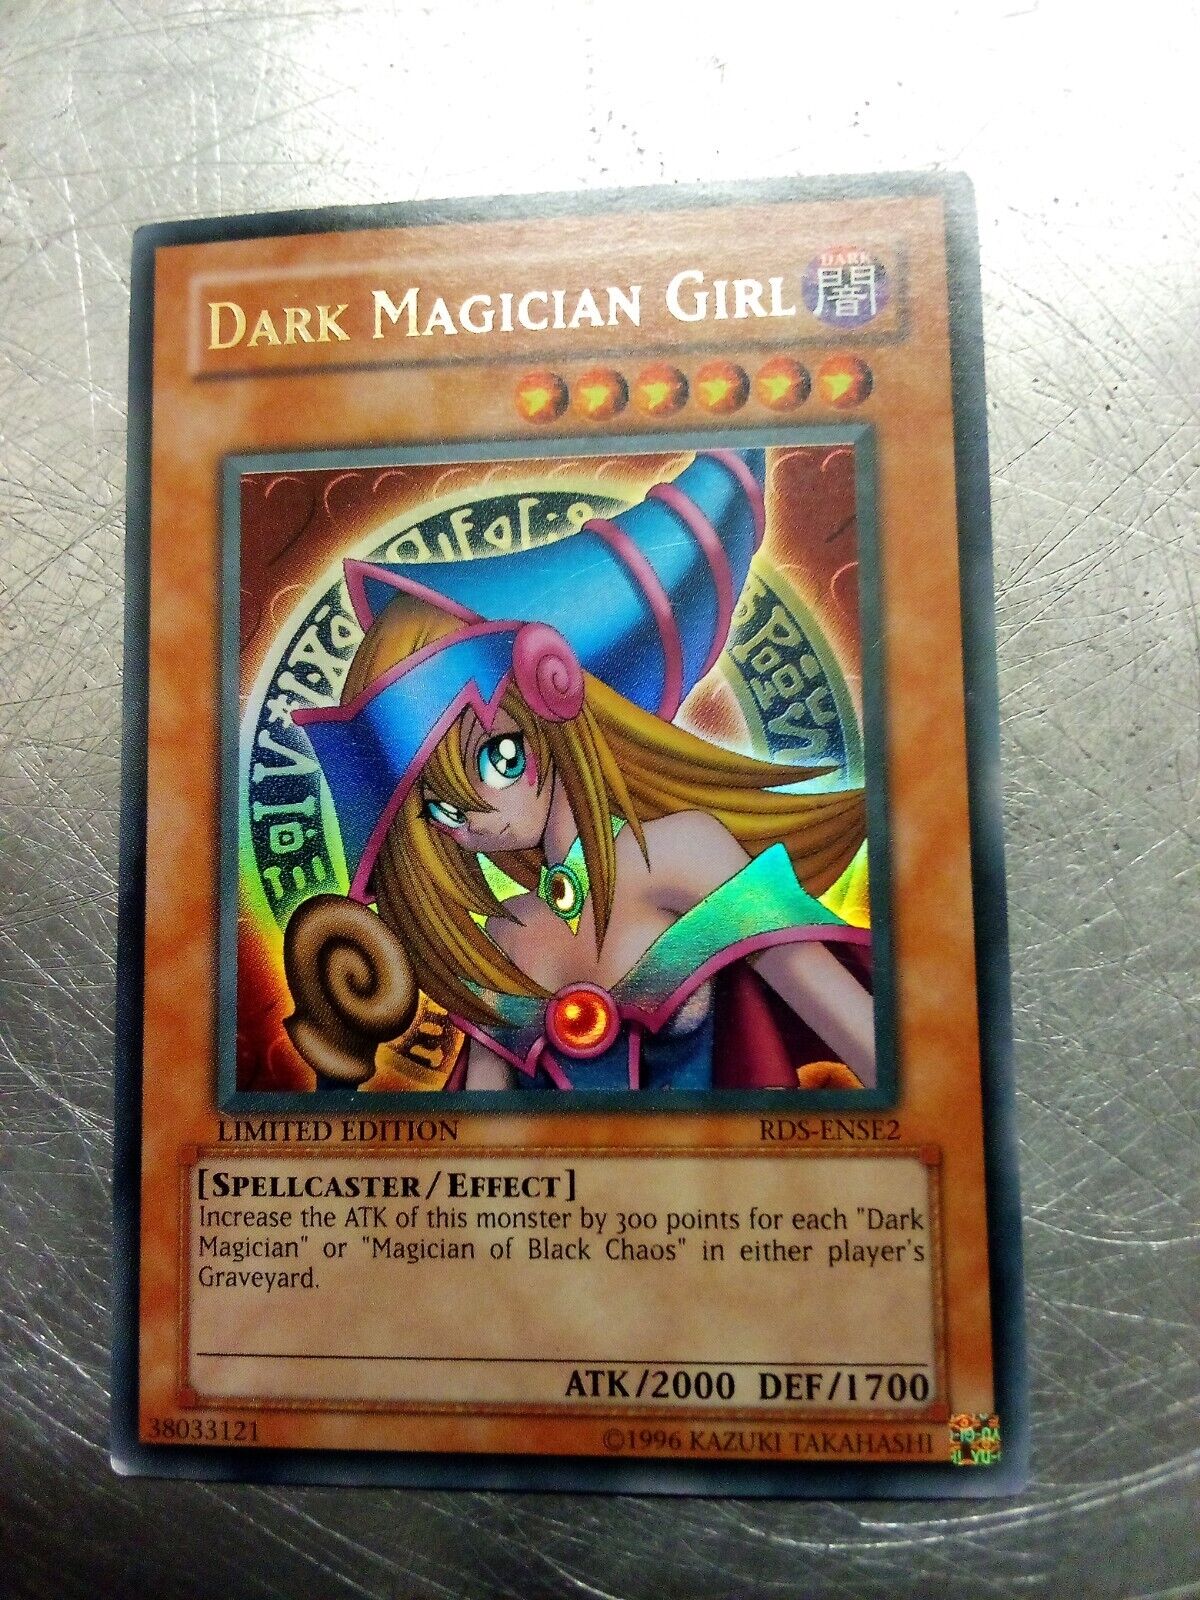 Dark Magician Girl RDS-ENSE2 Ultra Rare Limited Edition 